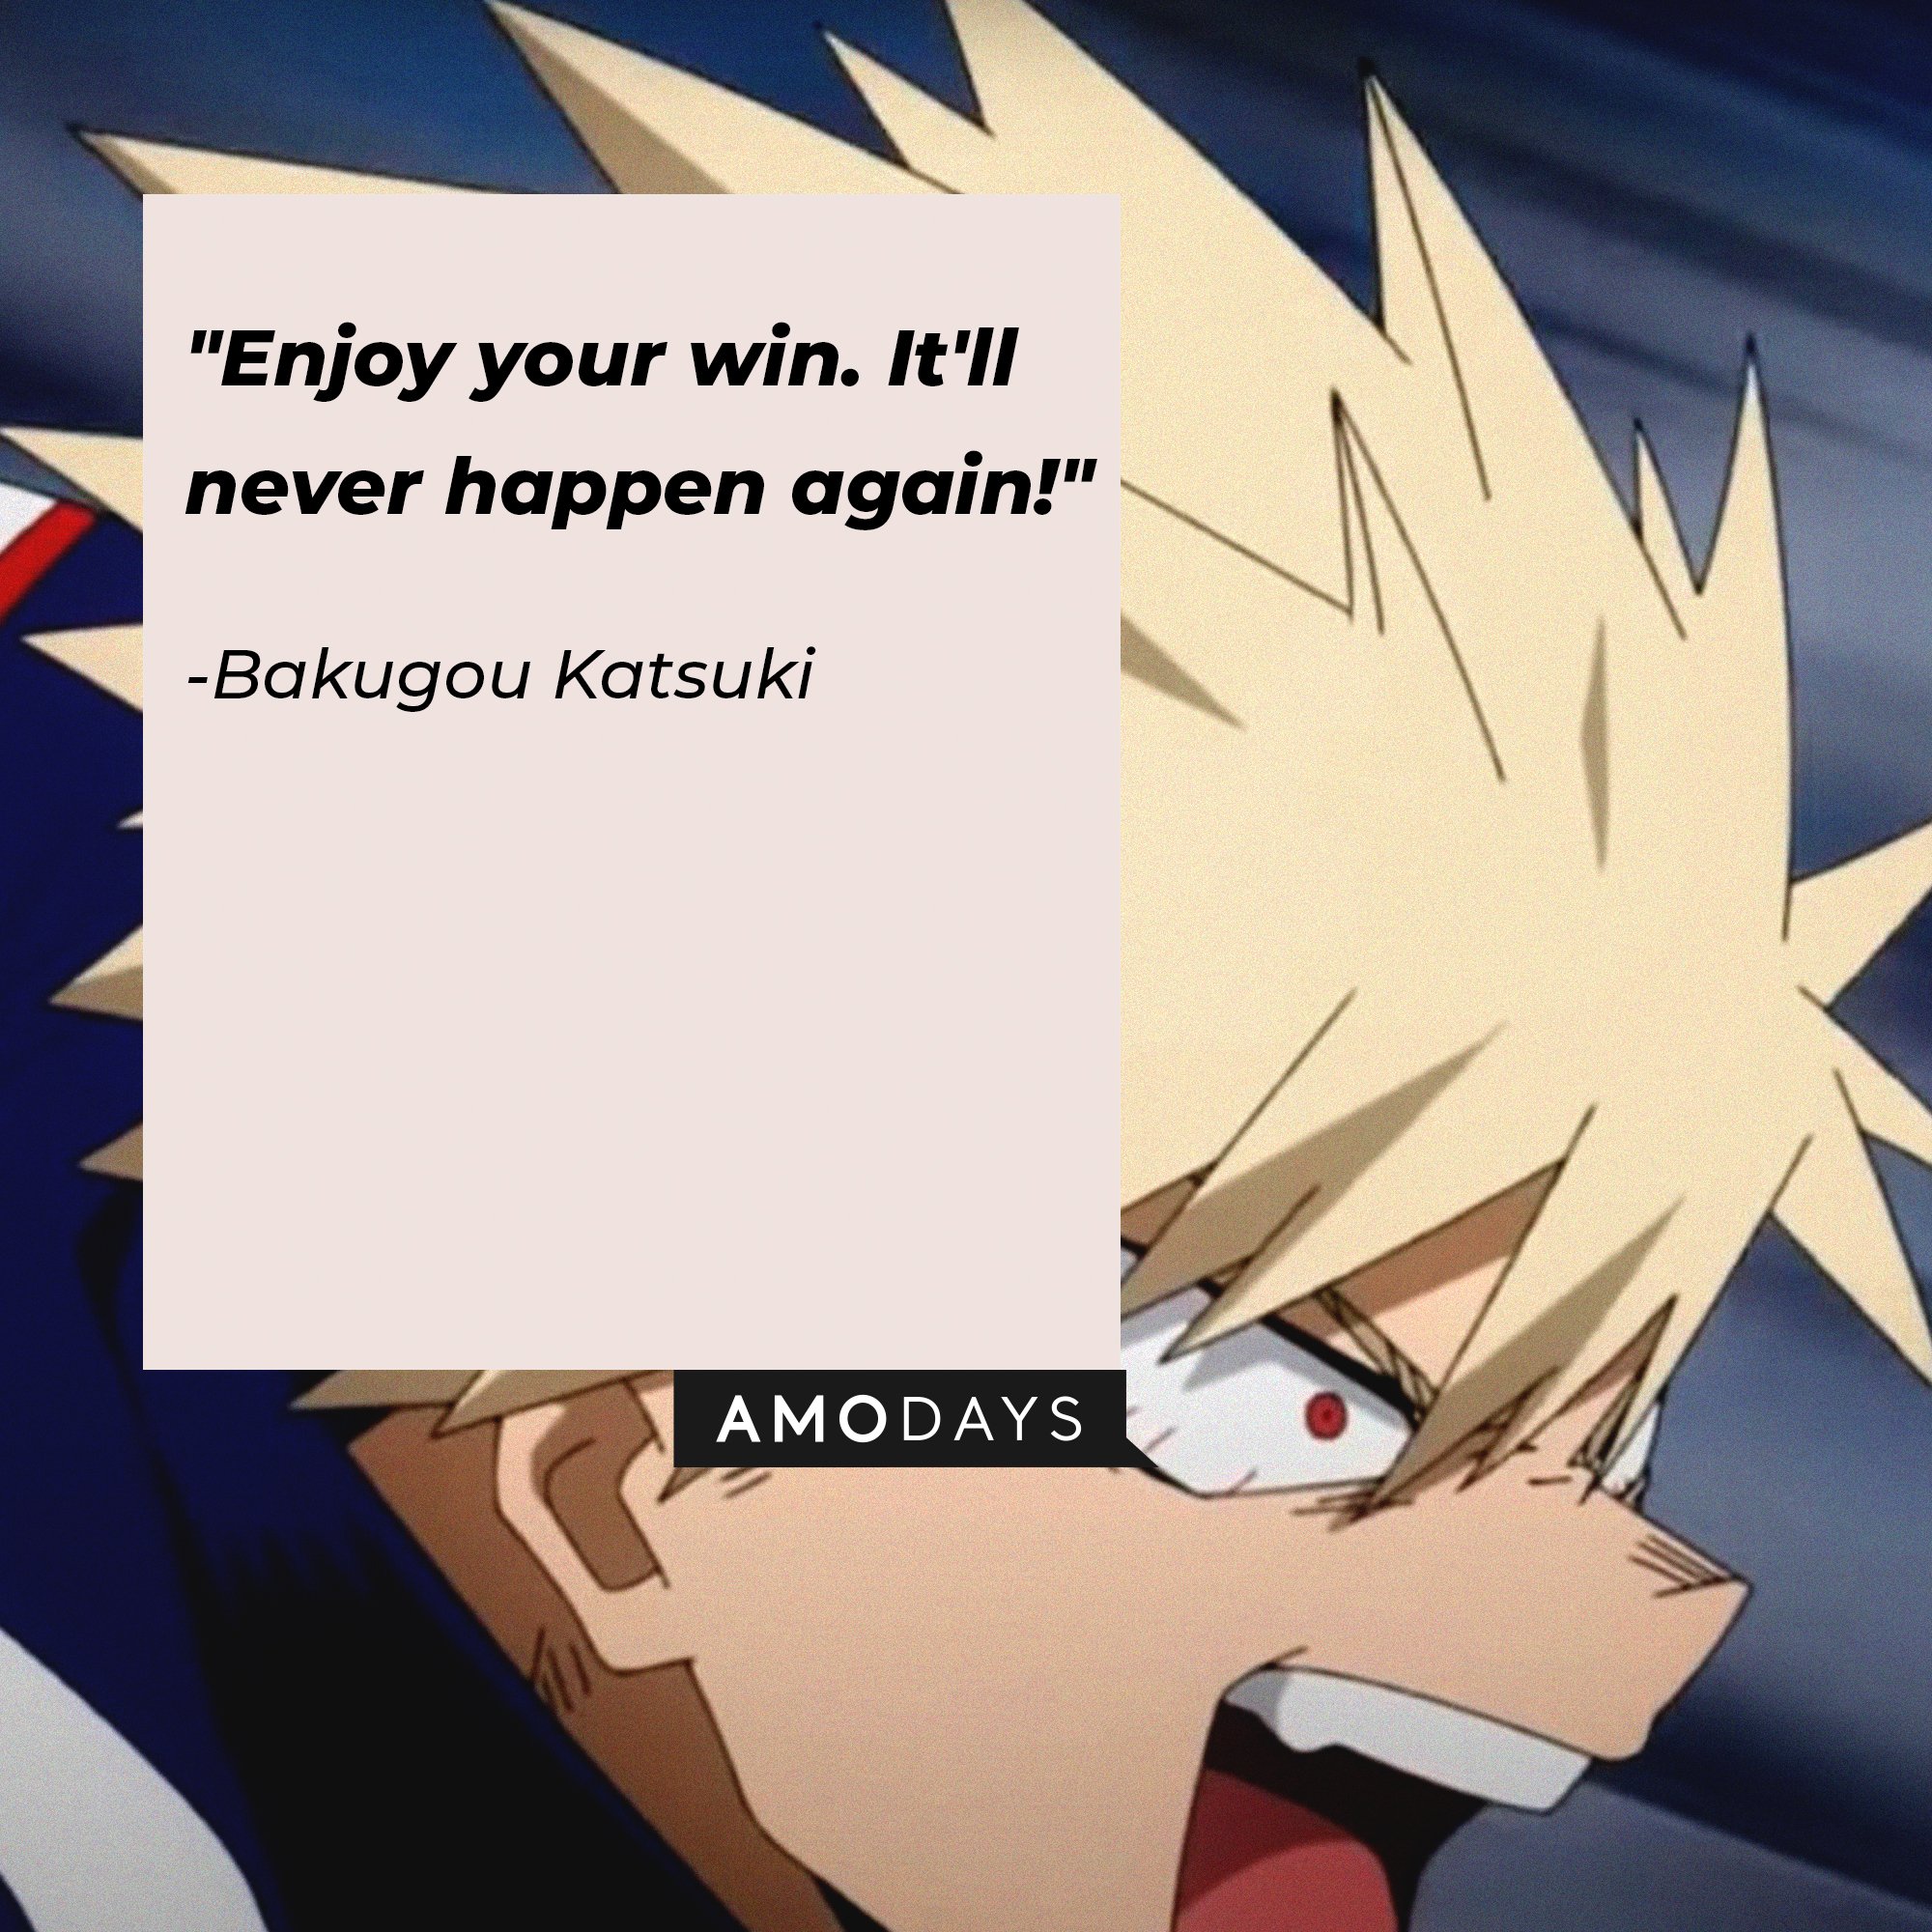 Bakugou Katsuki’s quote: "Enjoy your win. It'll never happen again!" | Image: AmoDays